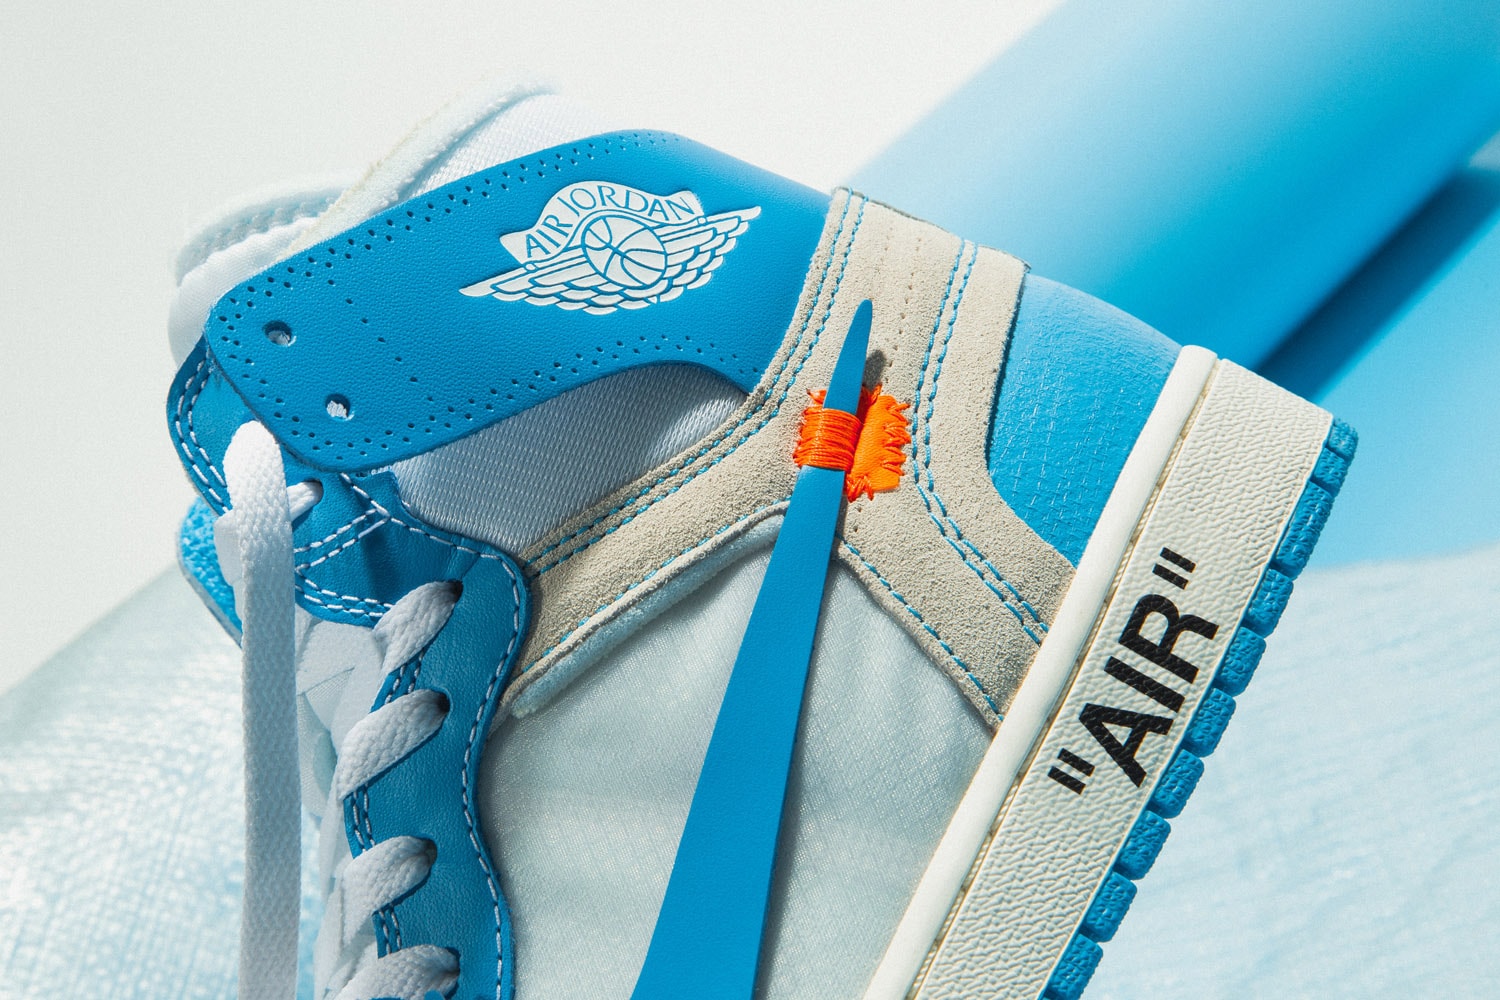 Virgil Abloh x Nike Air Jordan 1 "Dark Powder Blue" Collab Collaboration New Colorway Closer Look Coming Soon U.S. Exclusive On-Foot